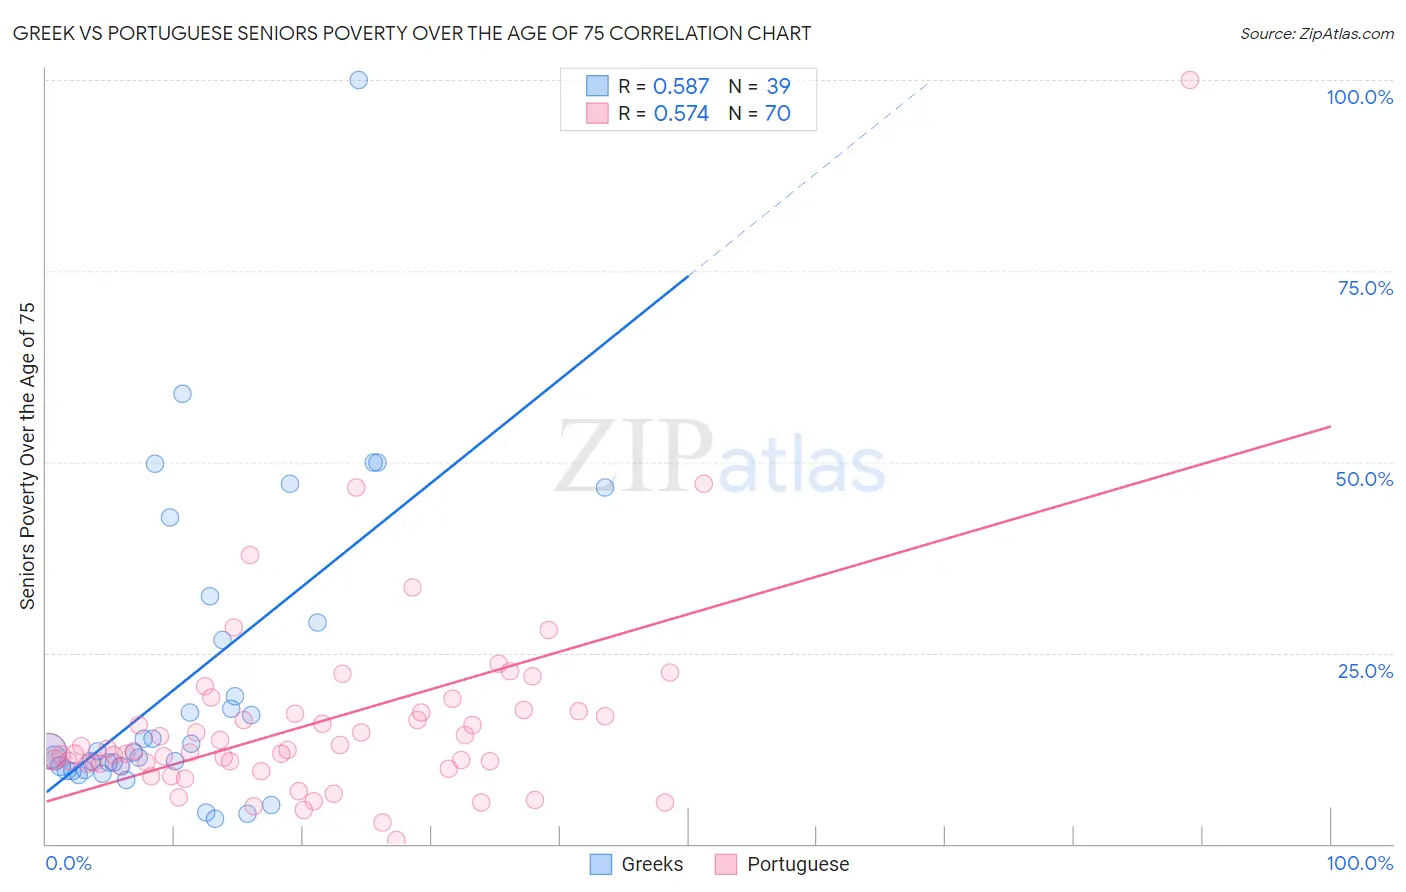 Greek vs Portuguese Seniors Poverty Over the Age of 75